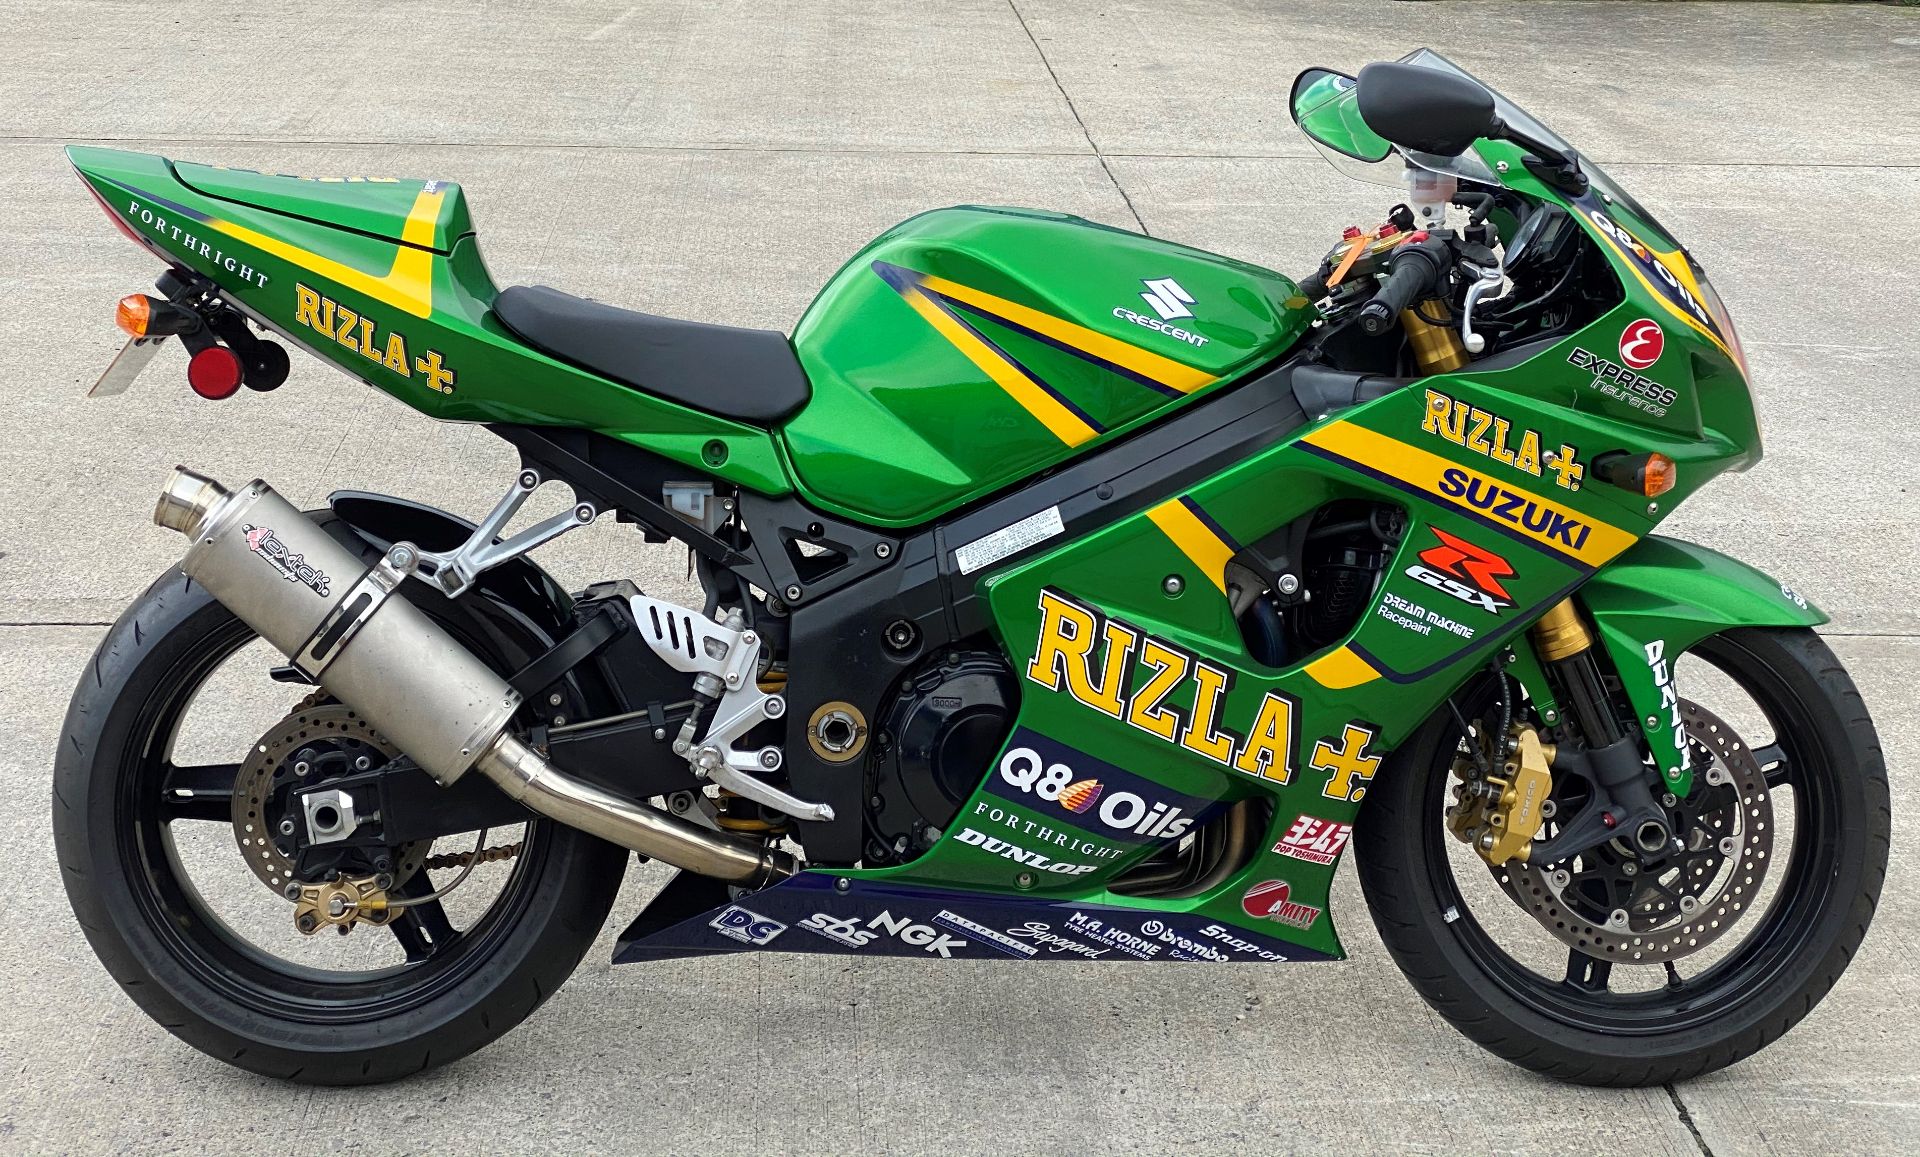 SUZUKI GSXR 1000 MOTORCYCLE - petrol - Rizla Green Reg No: DX05 ERK Rec. Mil: 25 miles 1st Reg: 01.